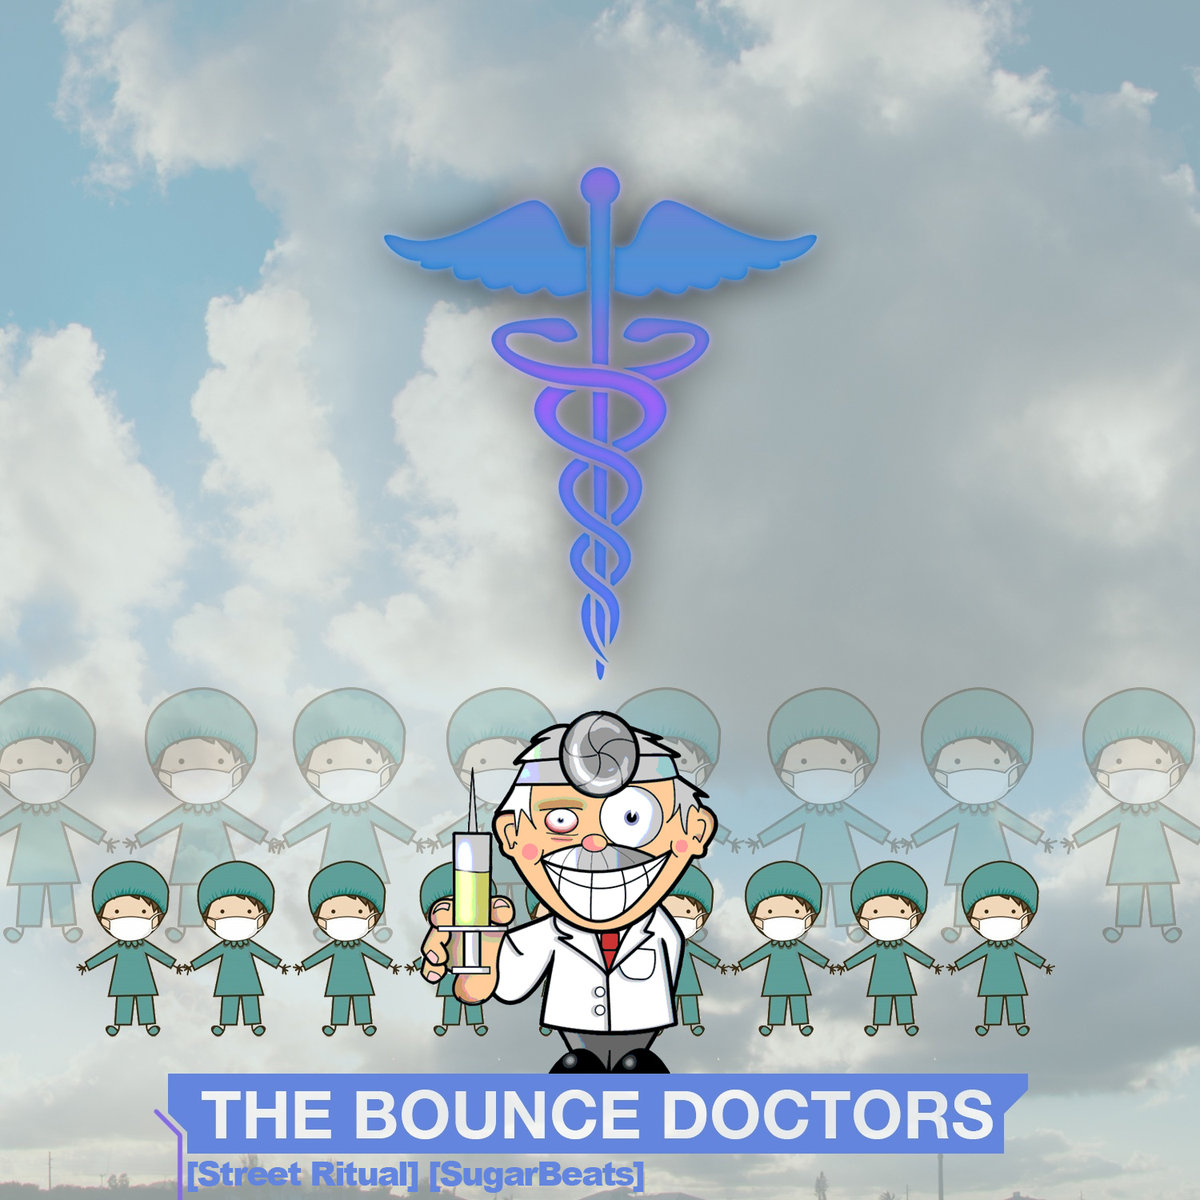 NoWa & Aeolus - Dustoff @ 'The Bounce Doctors' album (bass, chillstep)